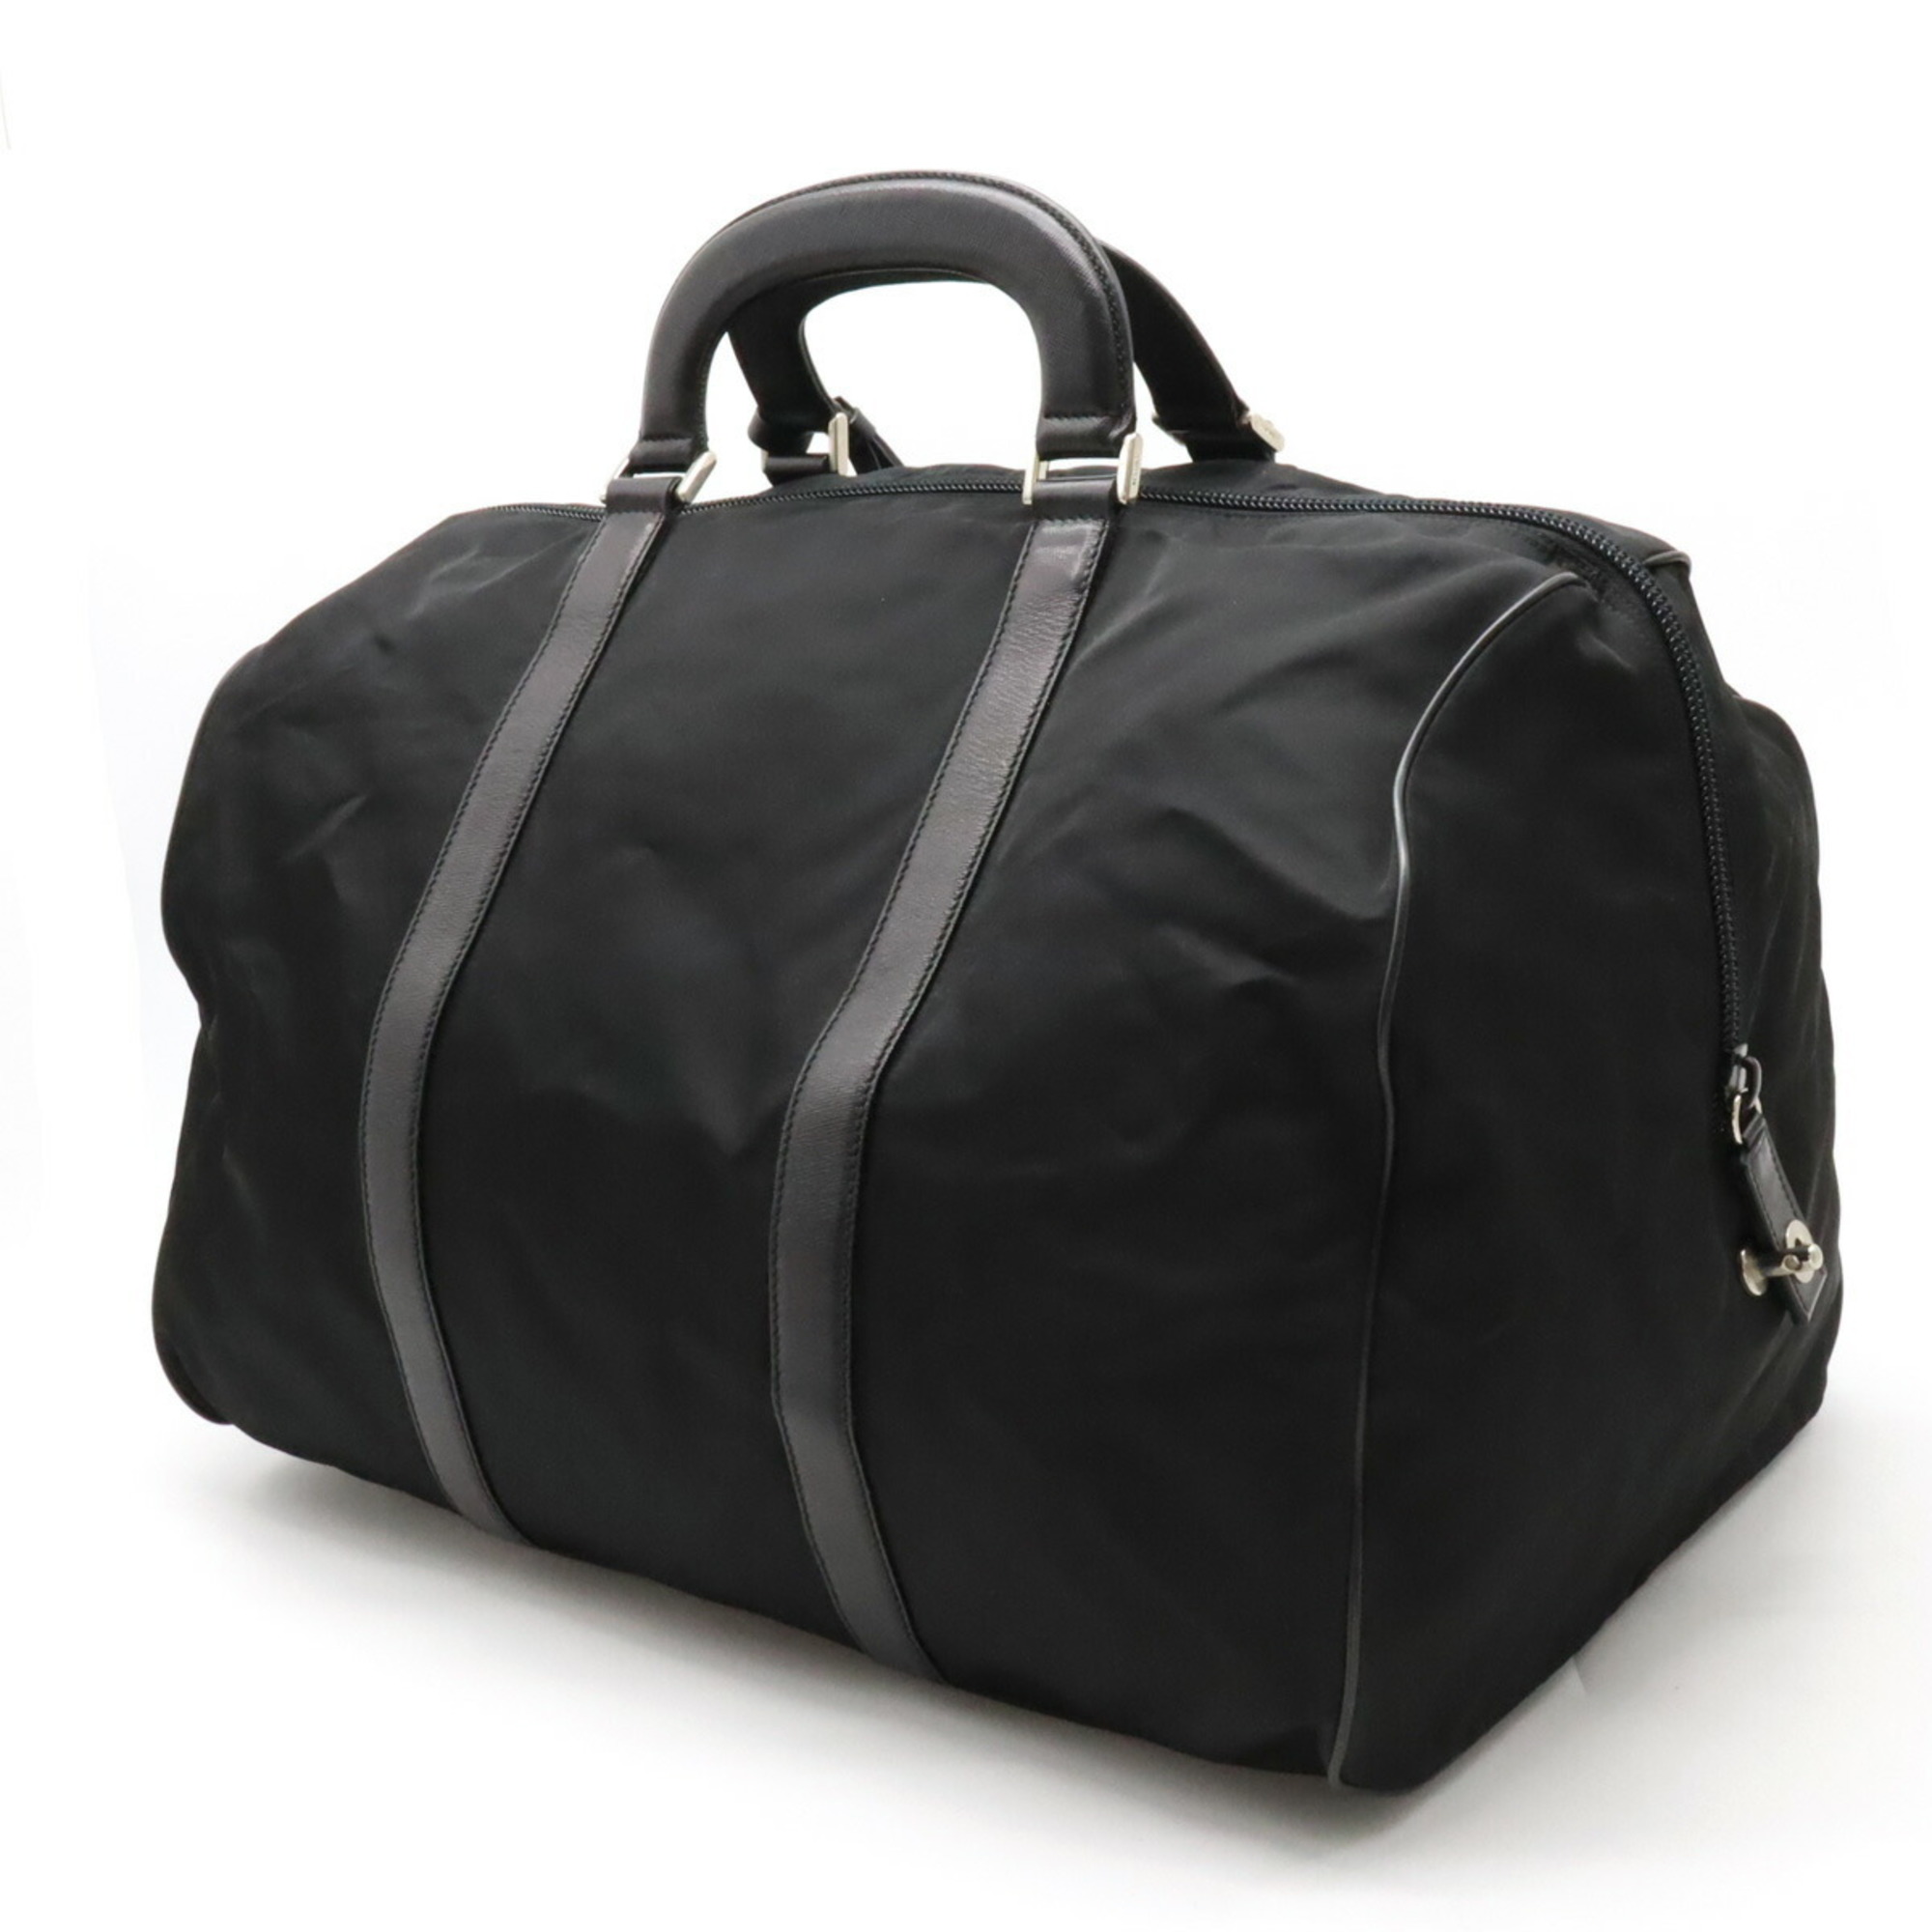 PRADA Prada Boston bag travel nylon leather NERO black